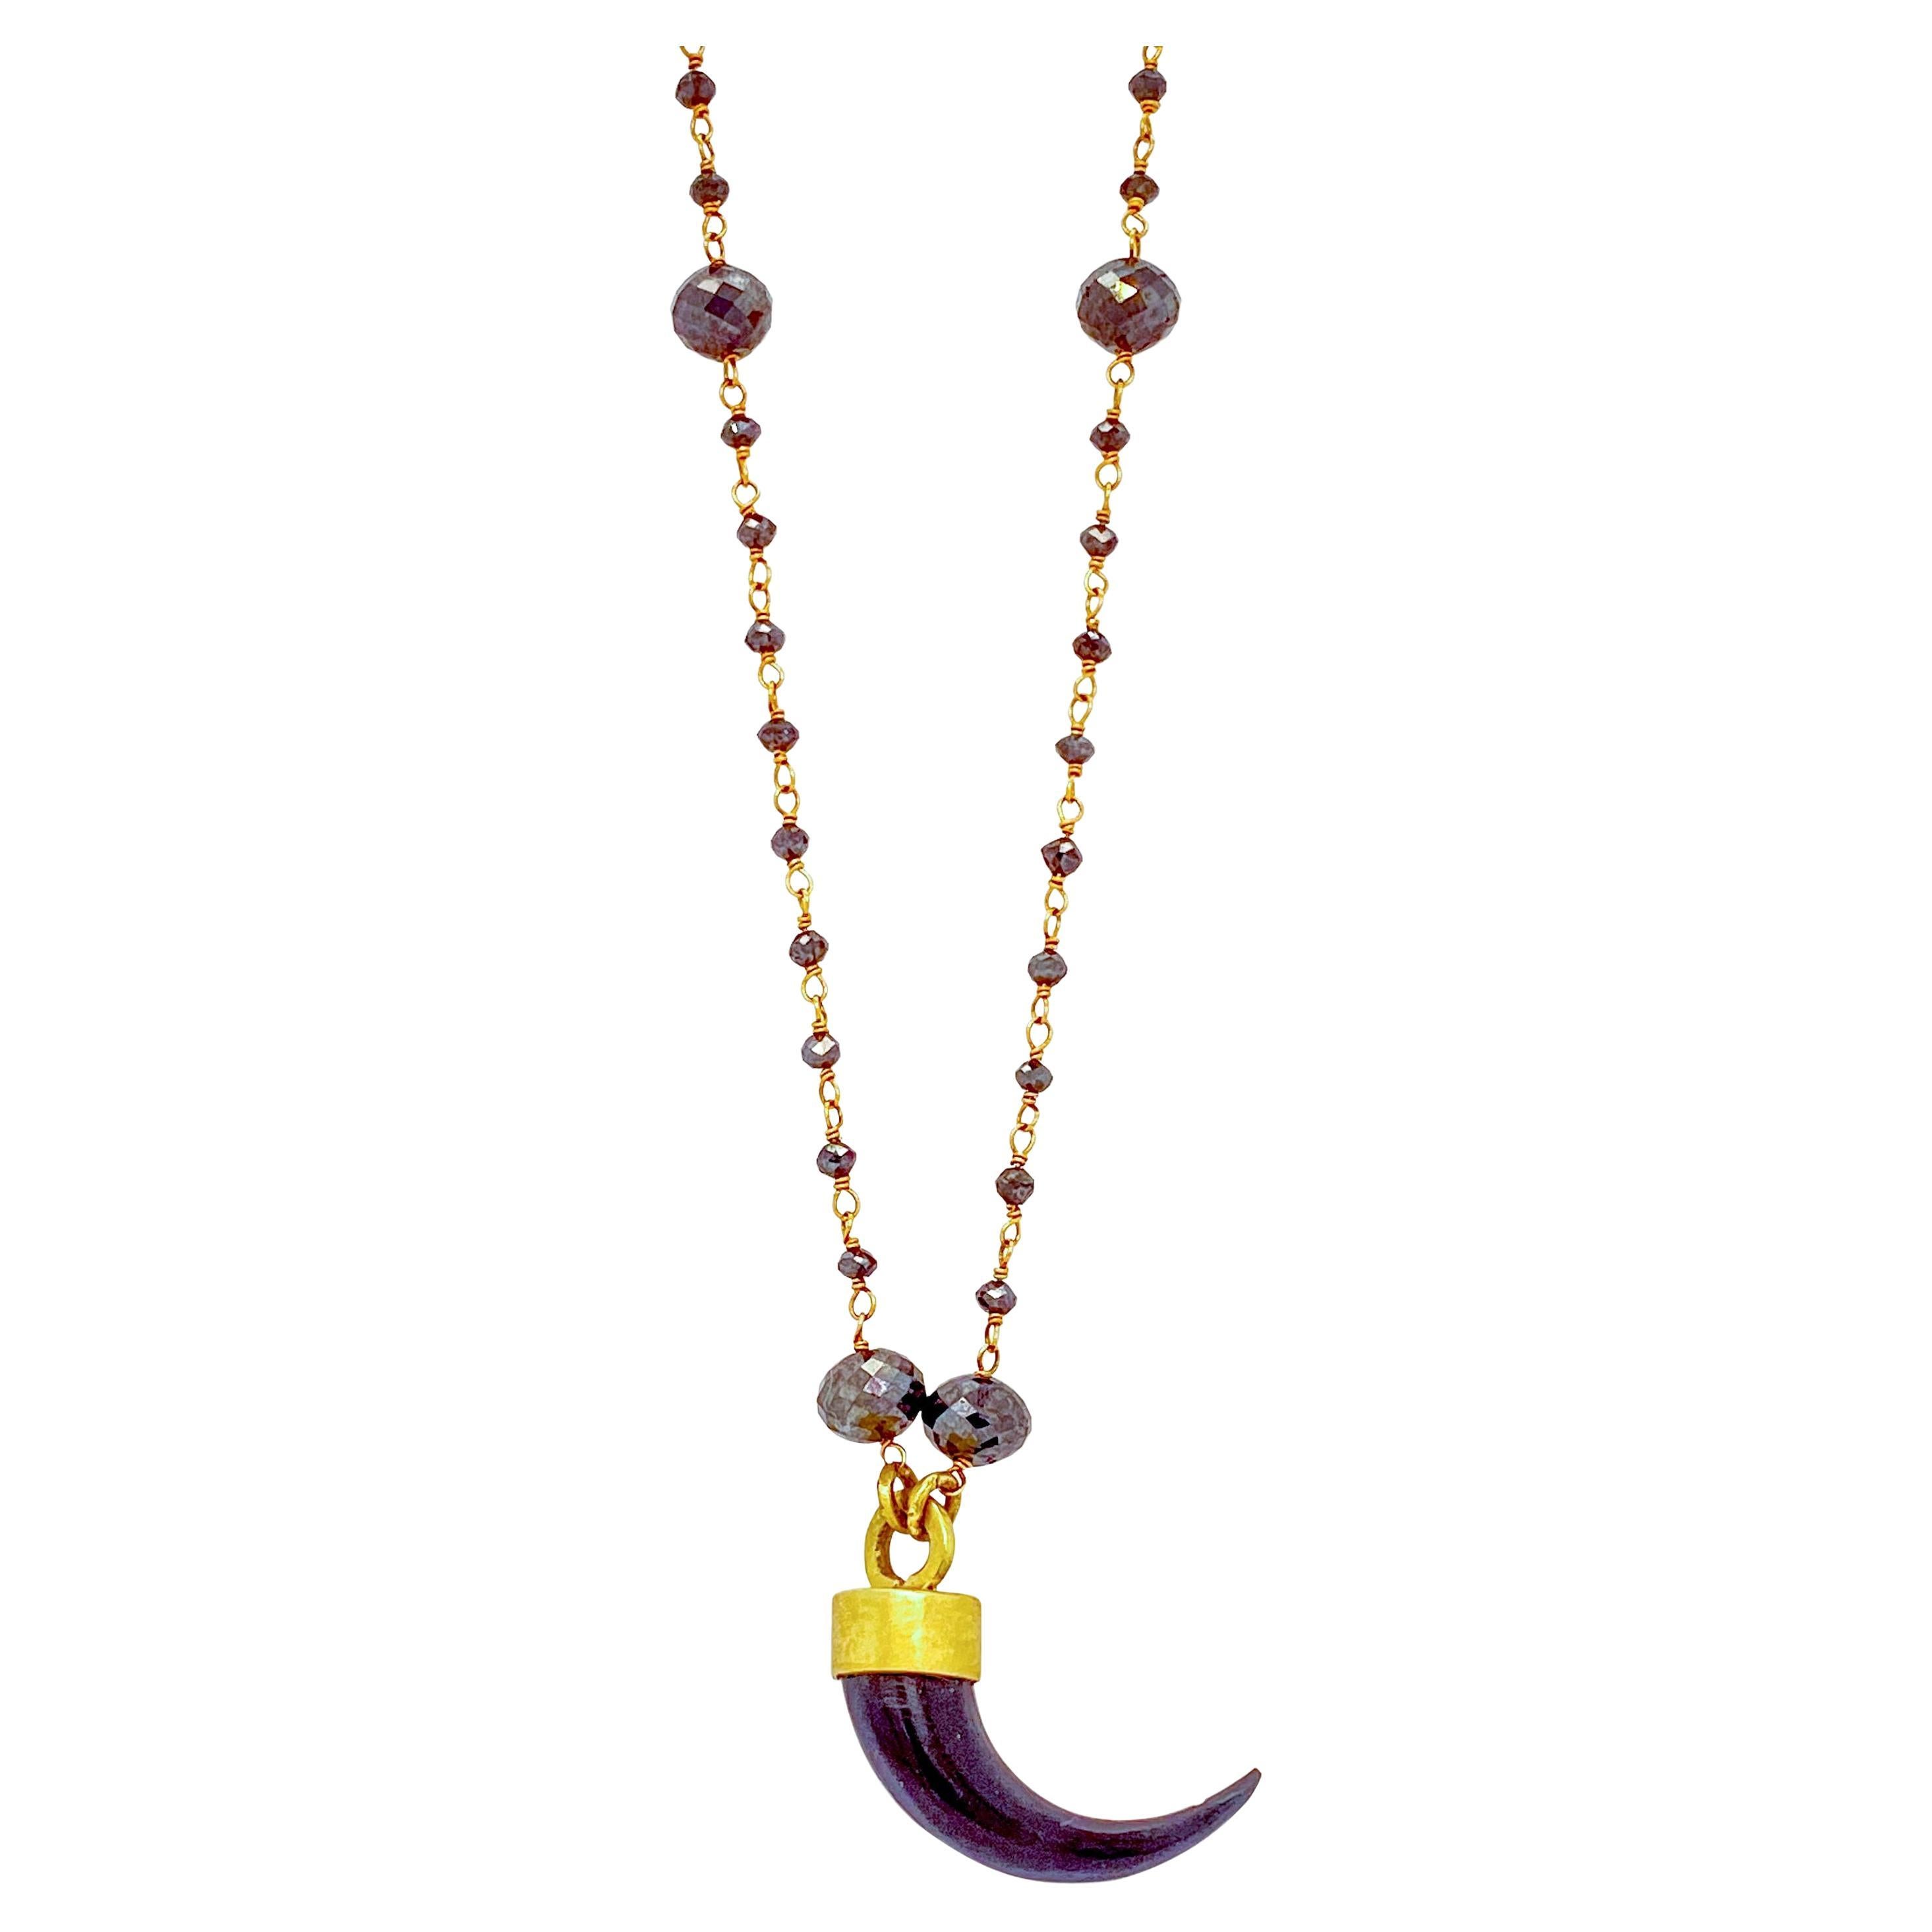 Diamond/Gold/Buffalo Horn Necklace from Contemporary Native artist Keri Ataumbi For Sale